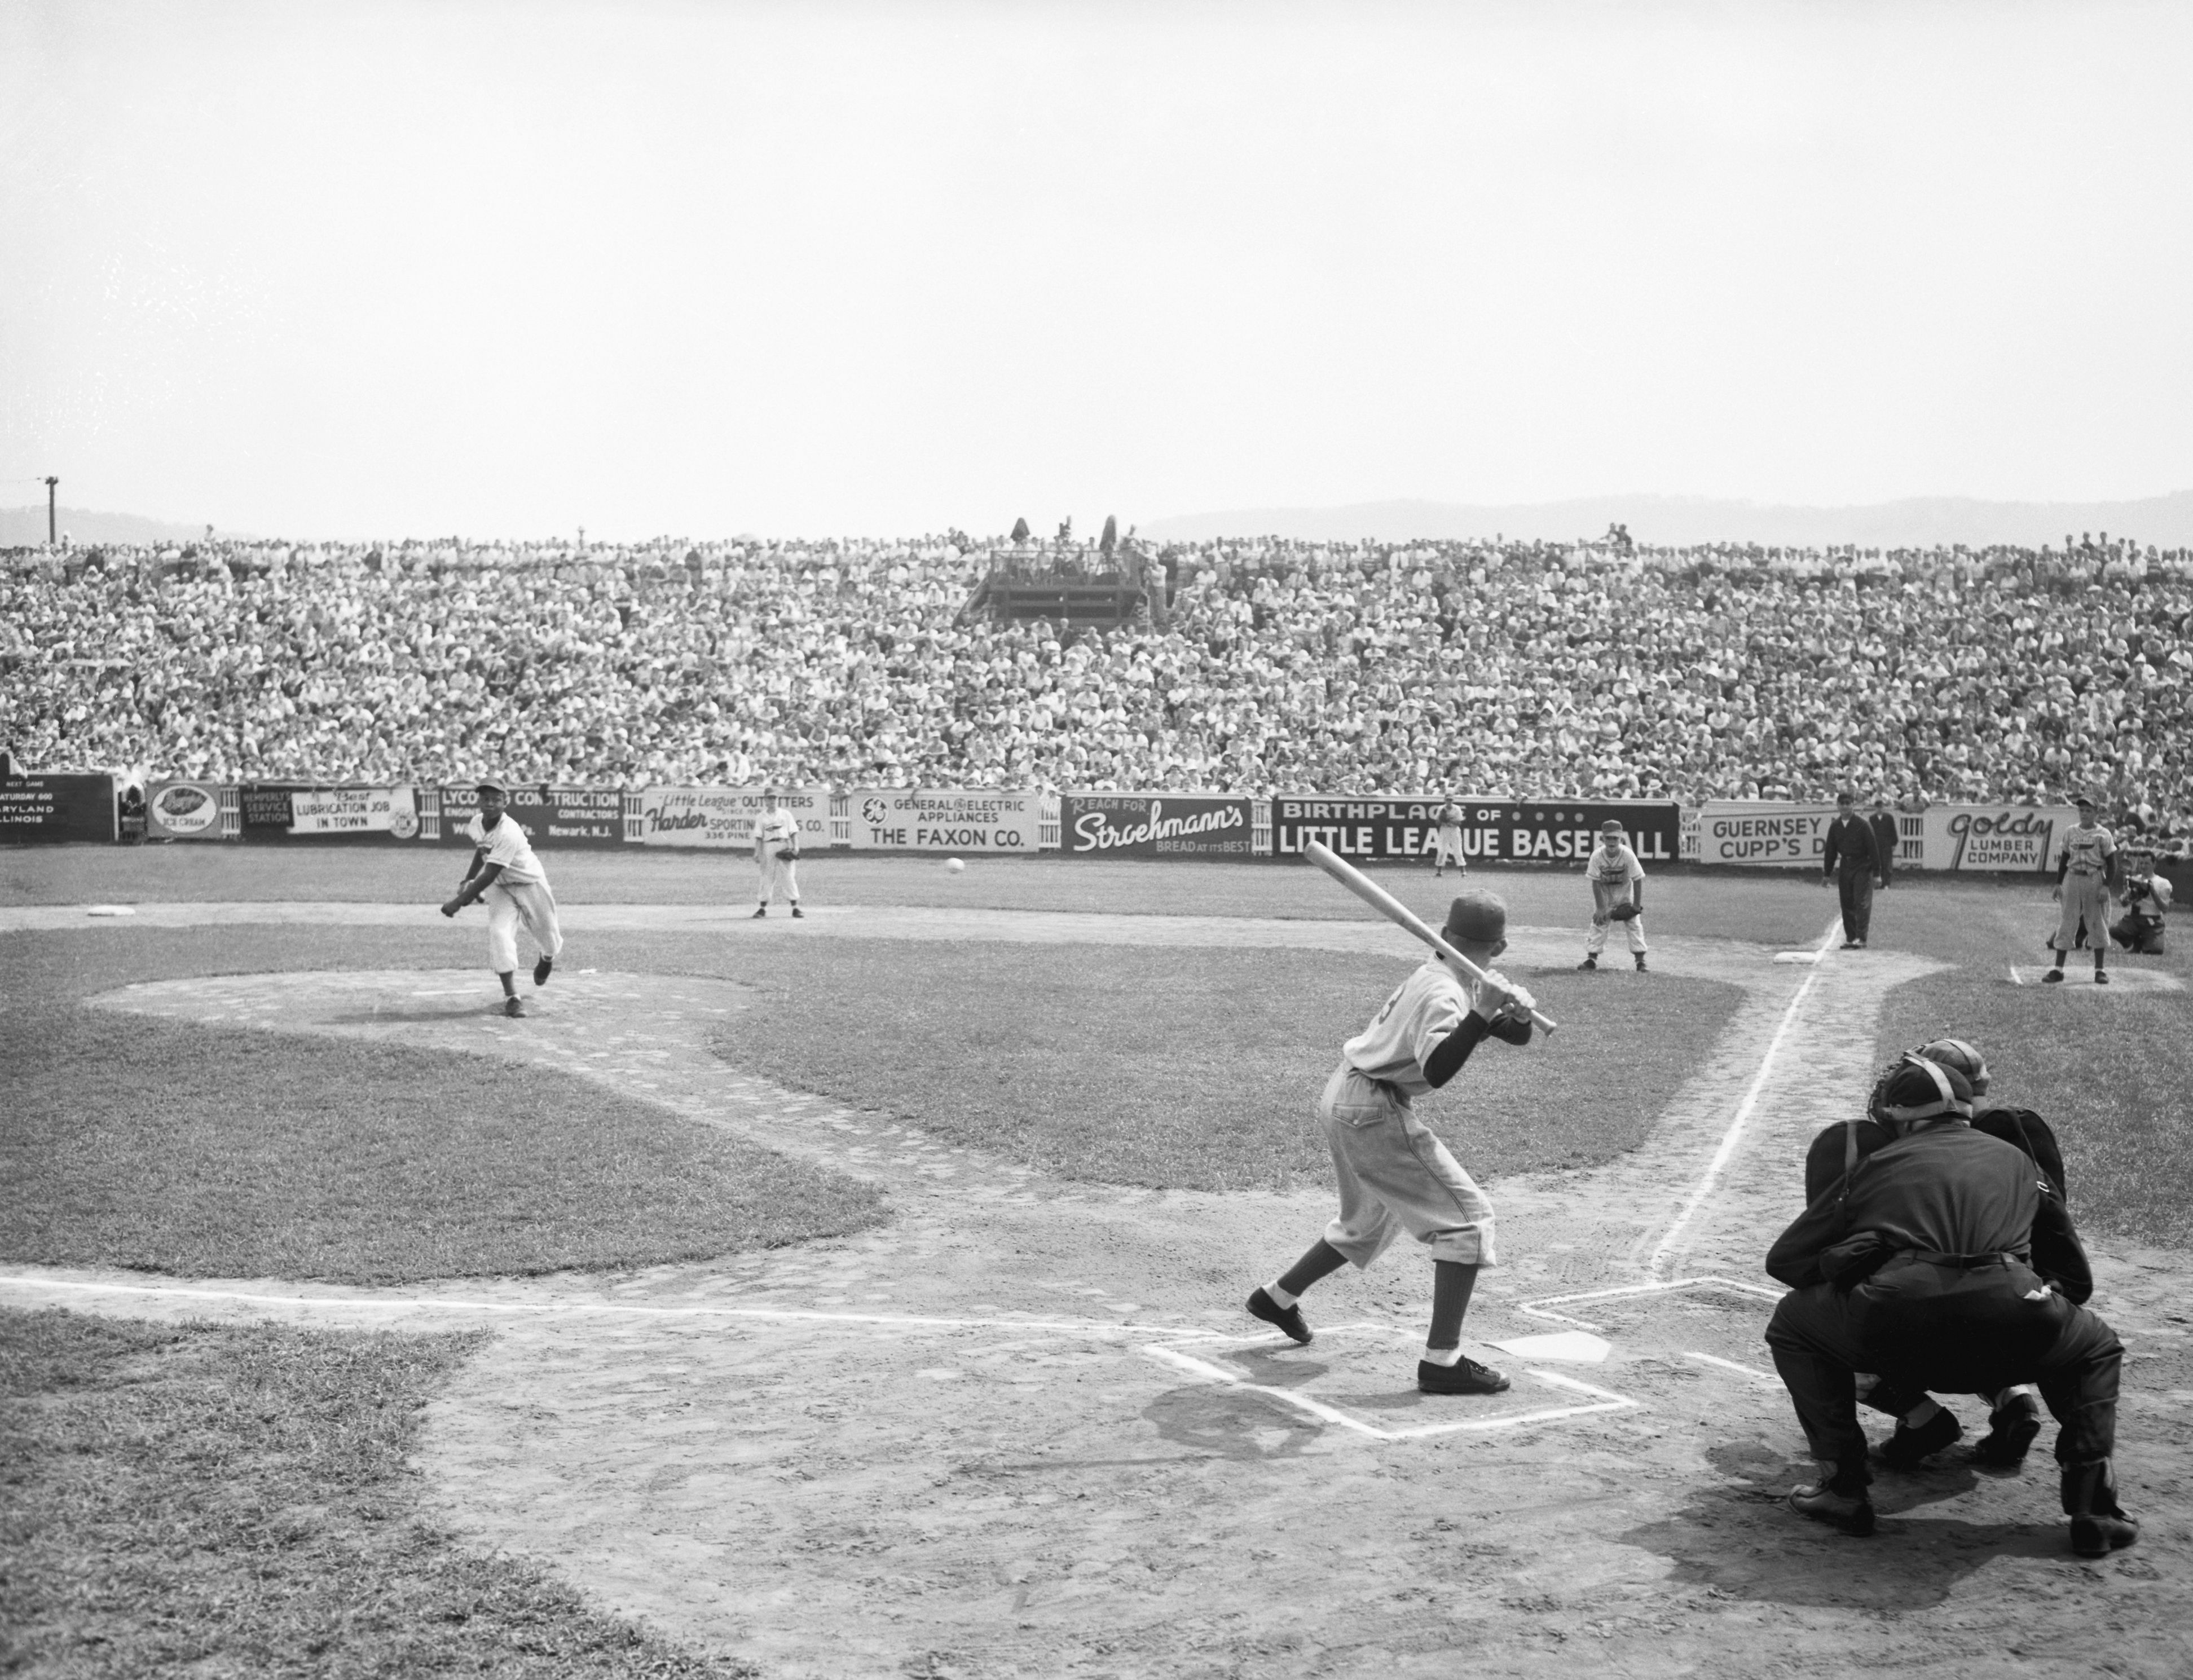 little league baseball game 1950s